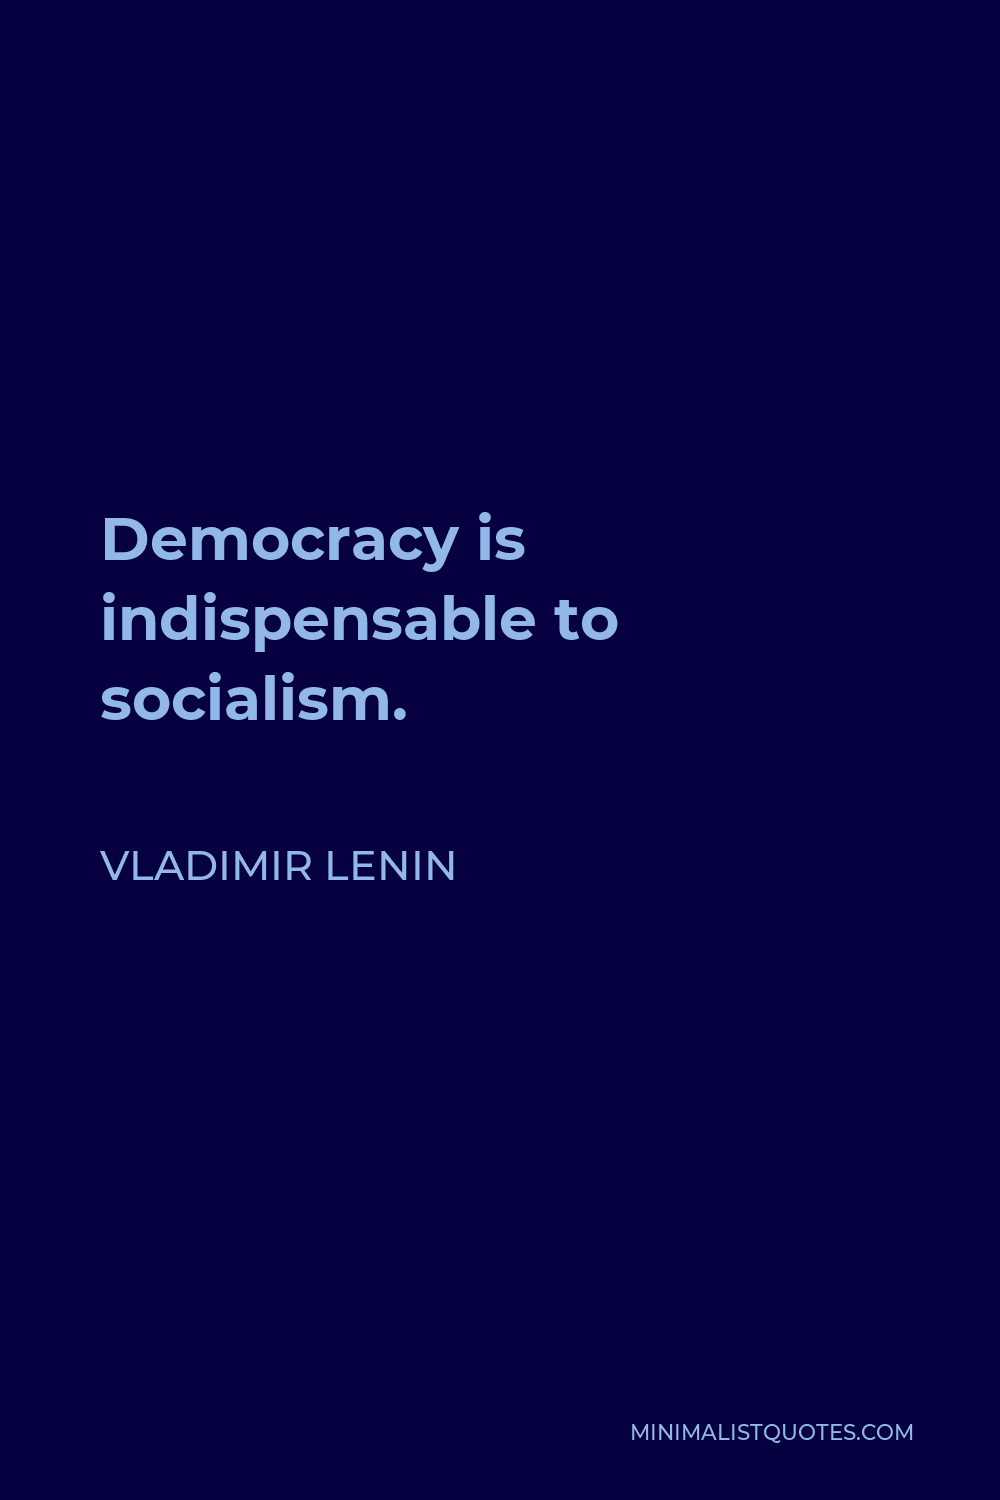 Vladimir Lenin Quote - Democracy is indispensable to socialism.